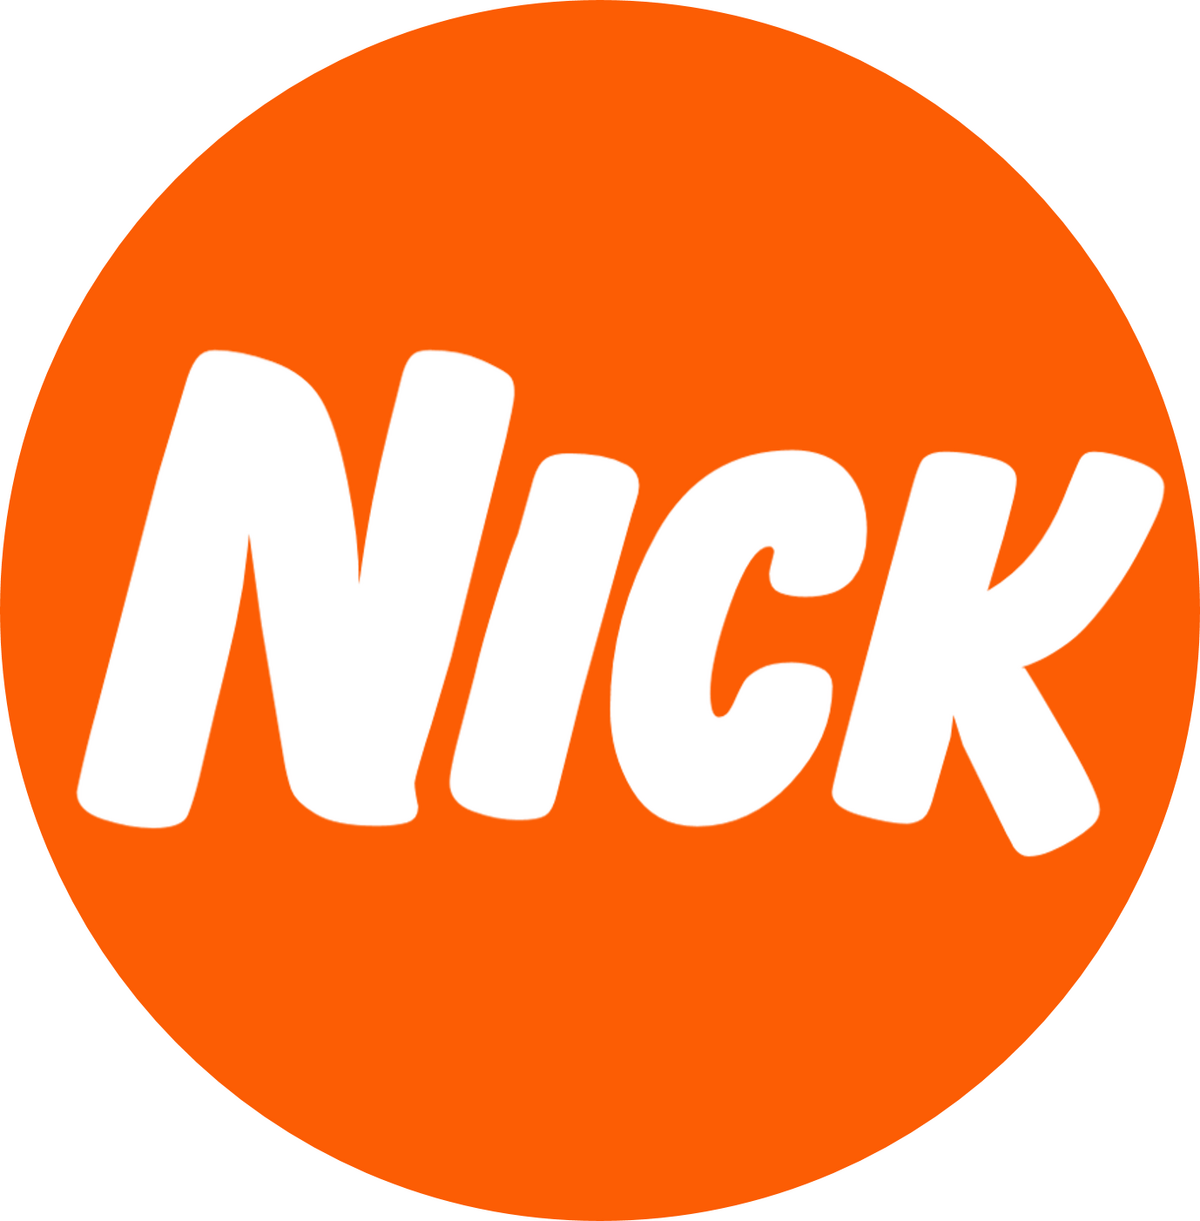 Nick 12. Телеканал Nickelodeon. Никелодеон значок канала. Ник логотип.